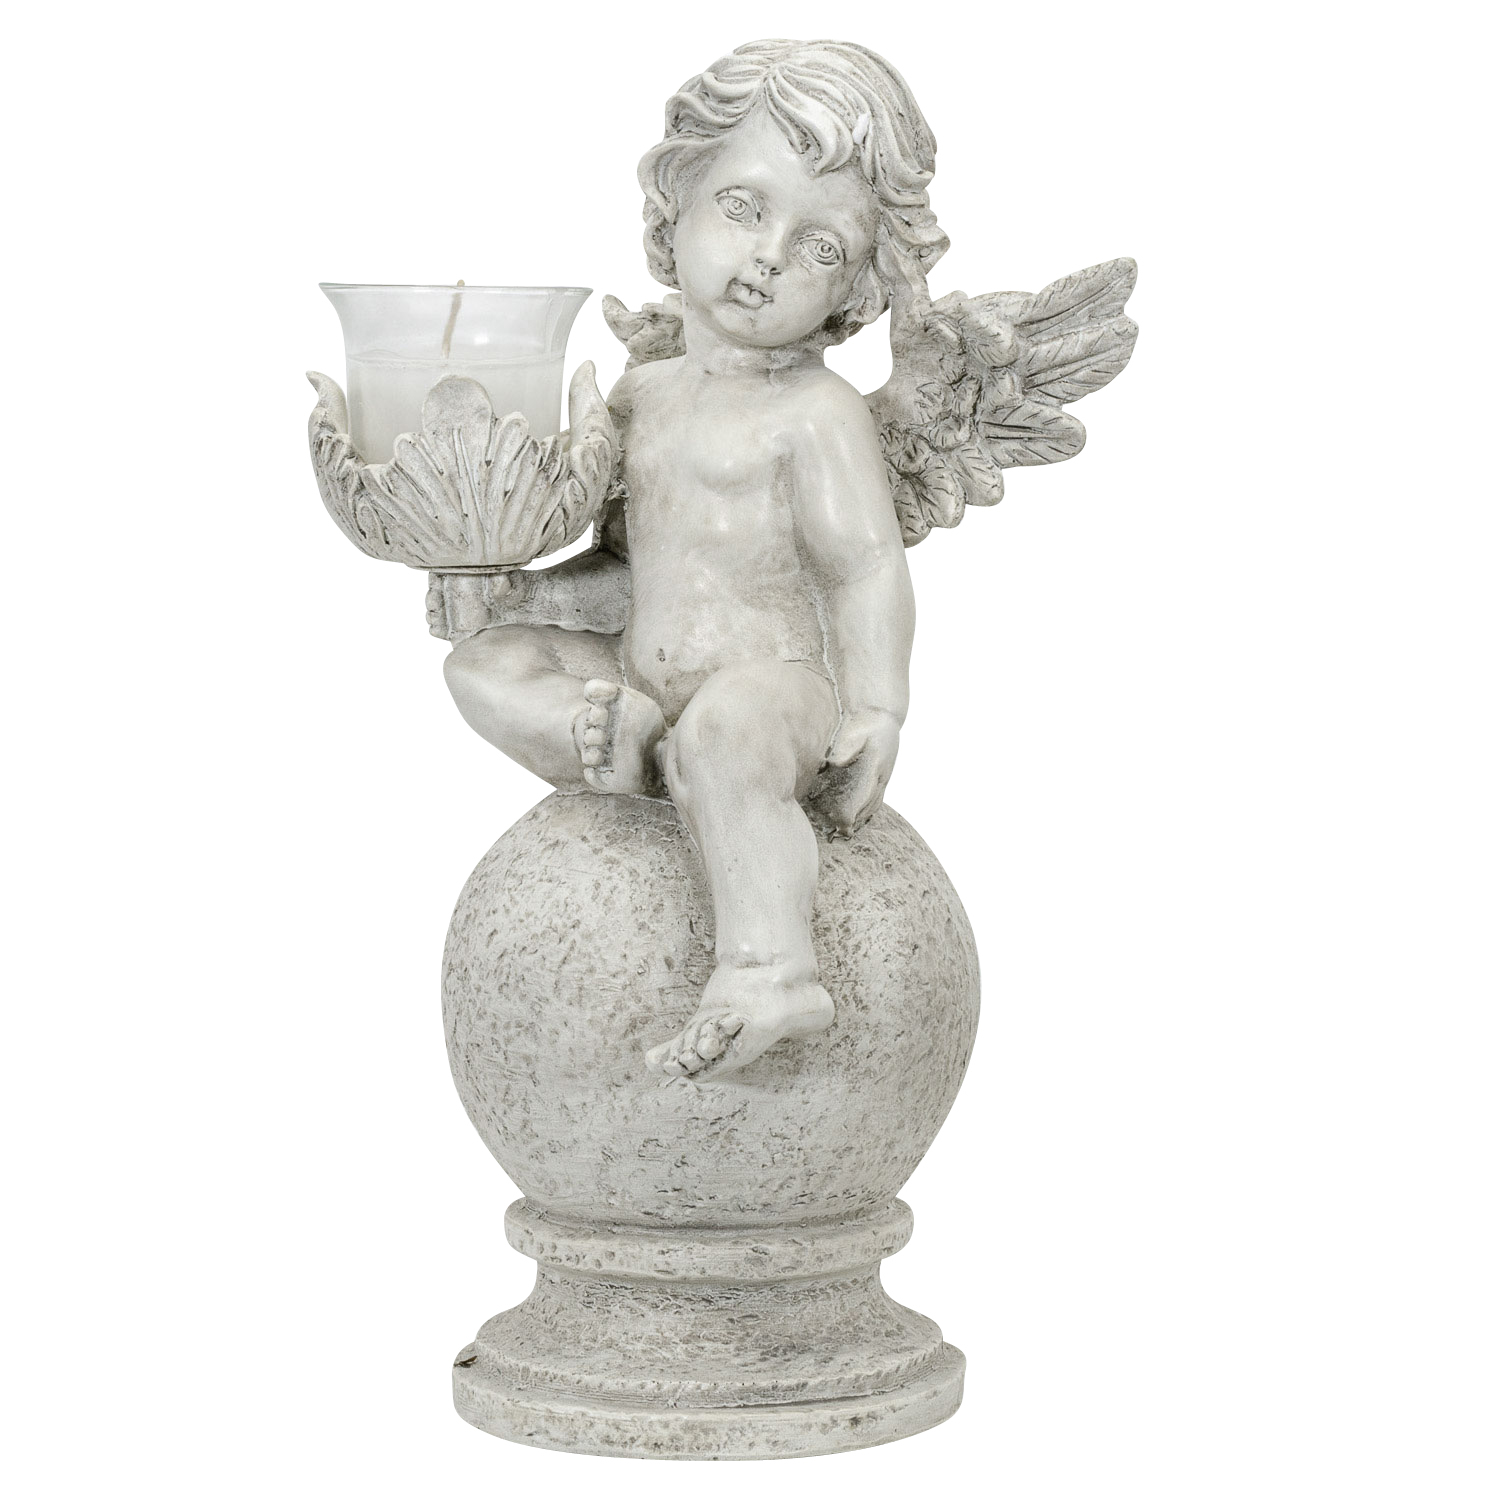 Engel Putte Engelsfigur Kerzenständer Blume handbemalt Antik-Stil 58cm a 